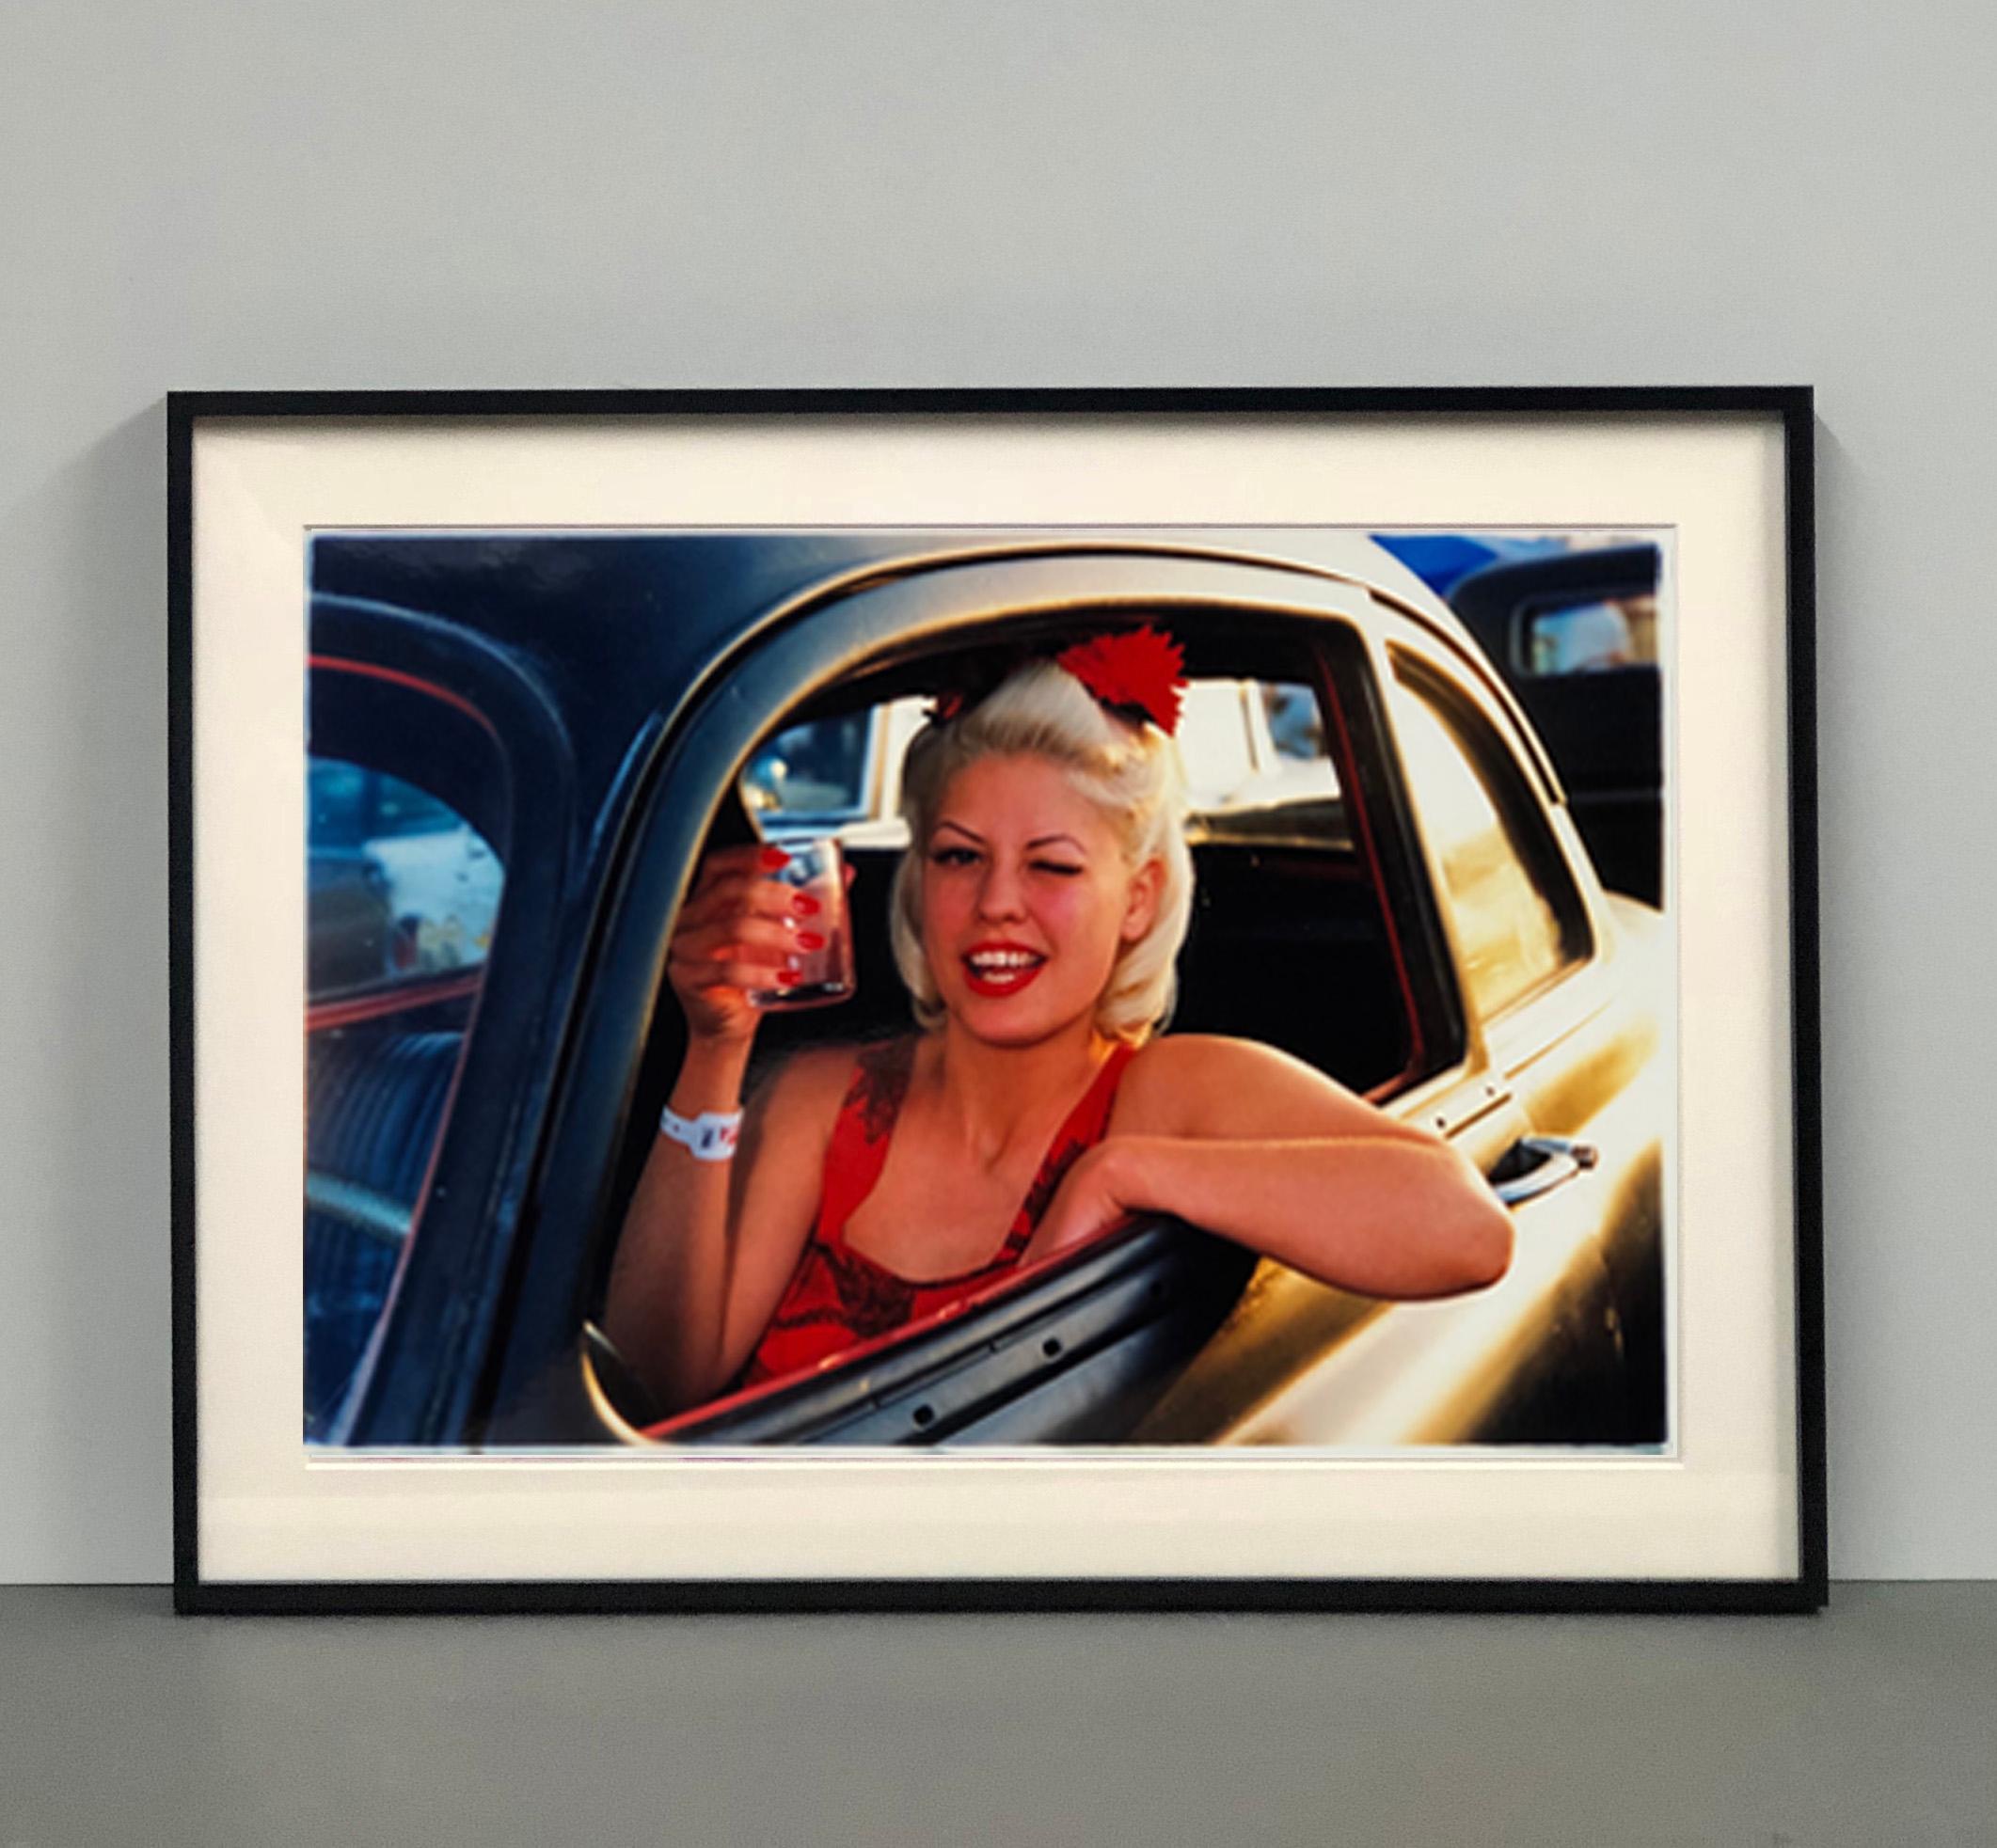 Lisa - Dragstrip Girl, Las Vegas - Contemporary portrait color photography - Print by Richard Heeps